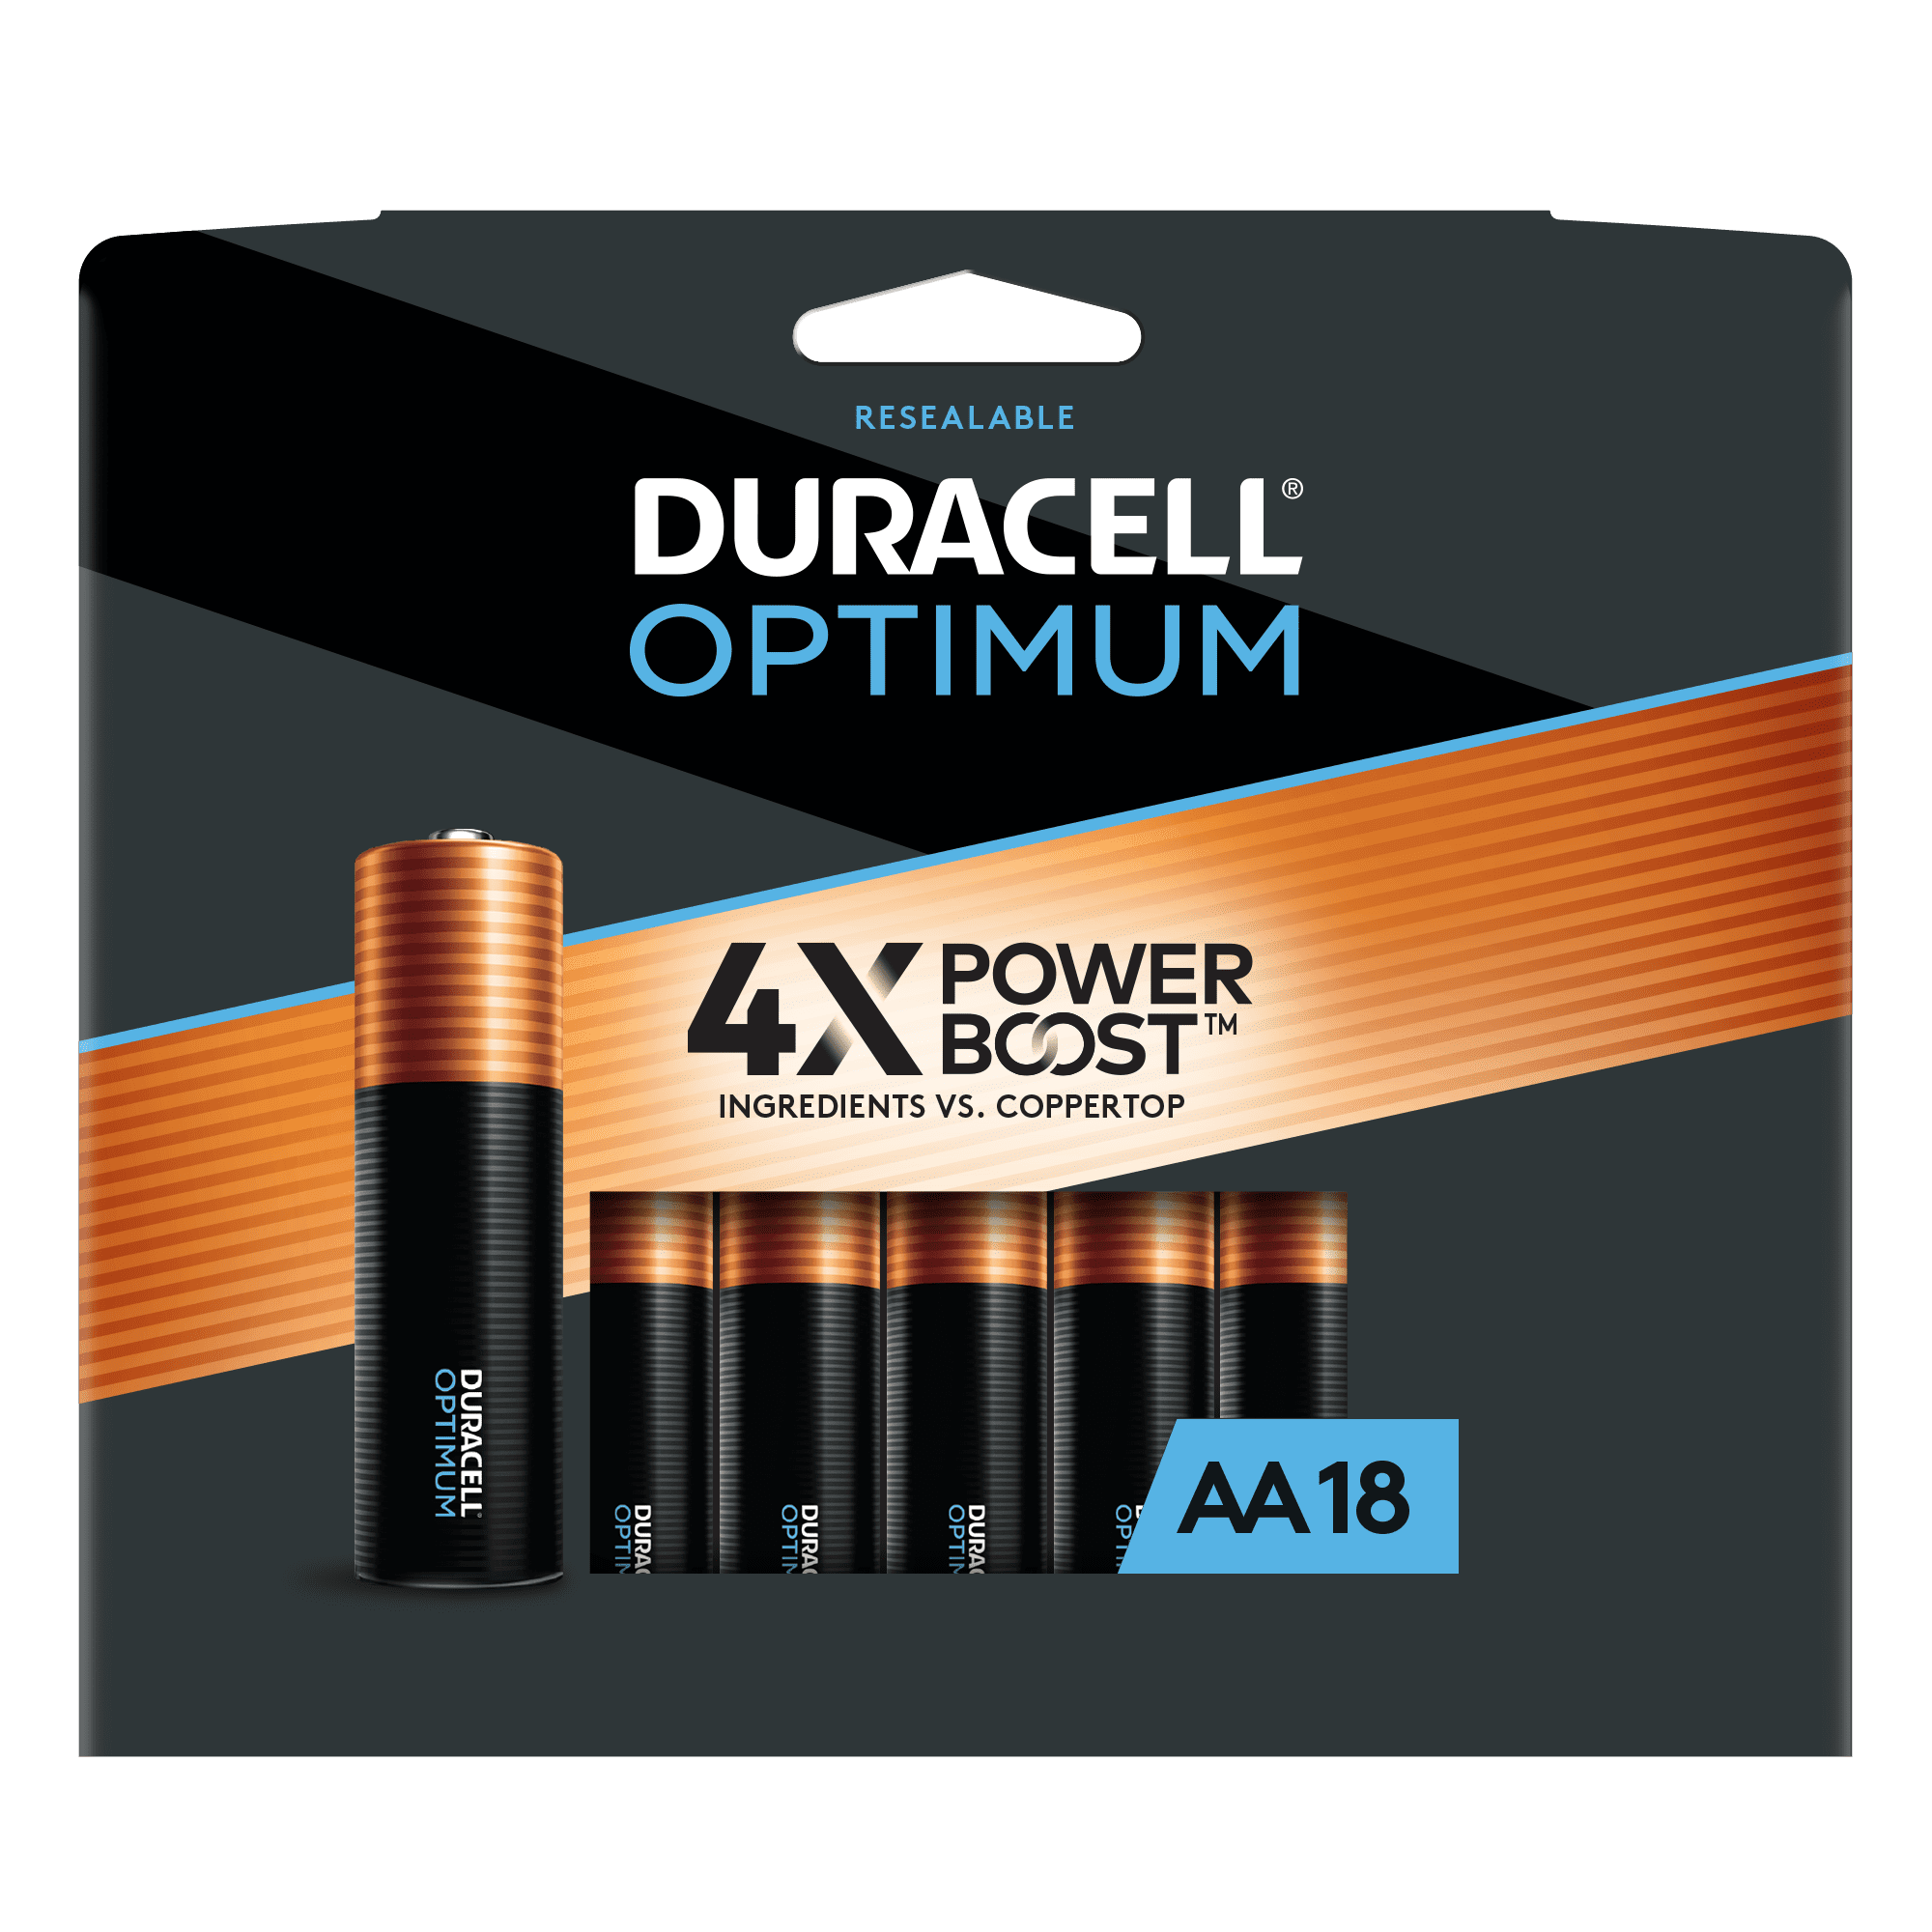 Optimum AA Battery 4X BOOST™, 18 Pack Resealable Package - Walmart.com